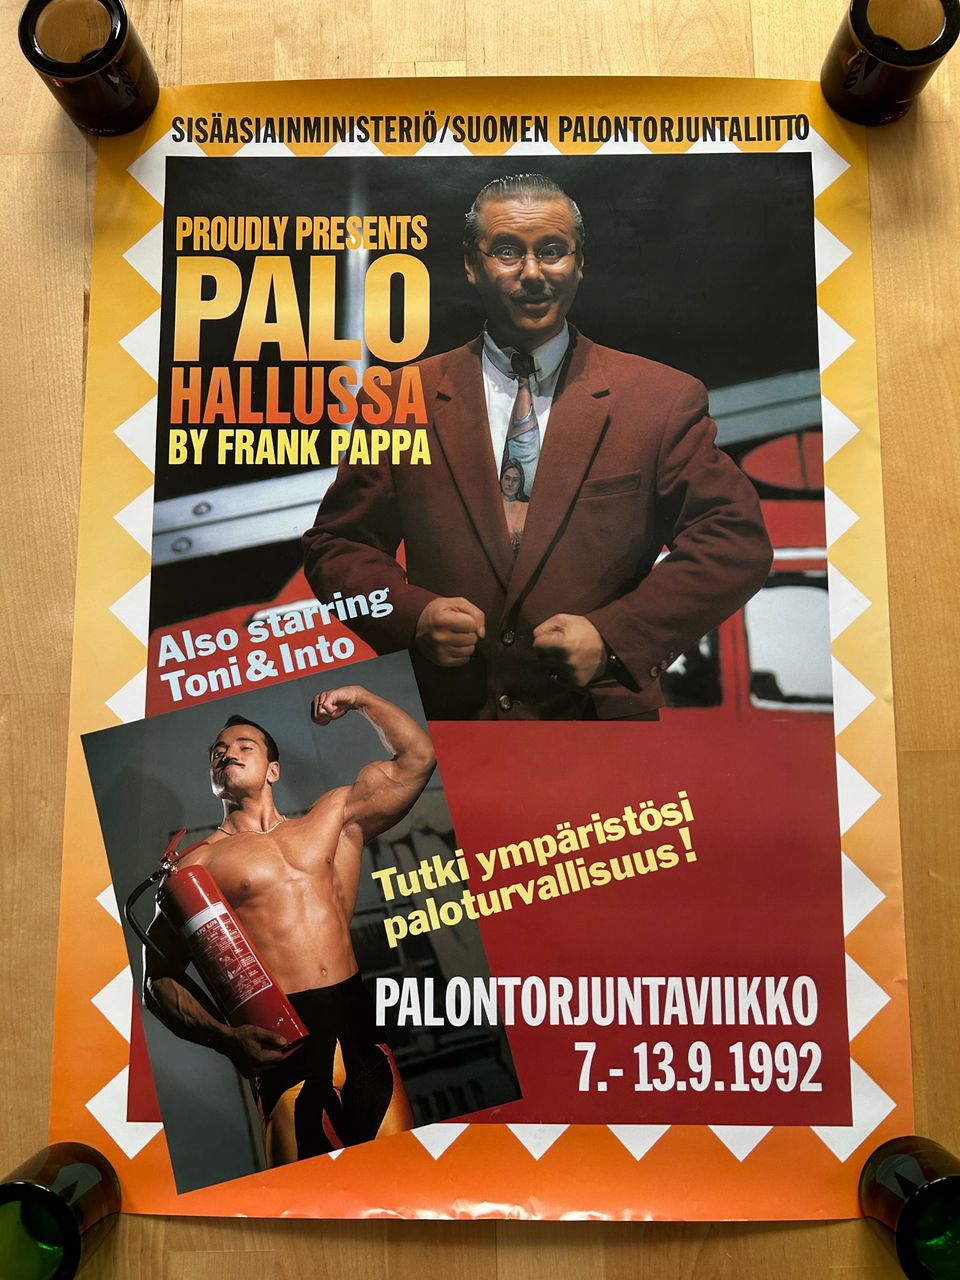 Palo hallussa By Frank Pappa / Palontorjuntaviikko 7-13.9.1992 ( 50 x 70 cm )